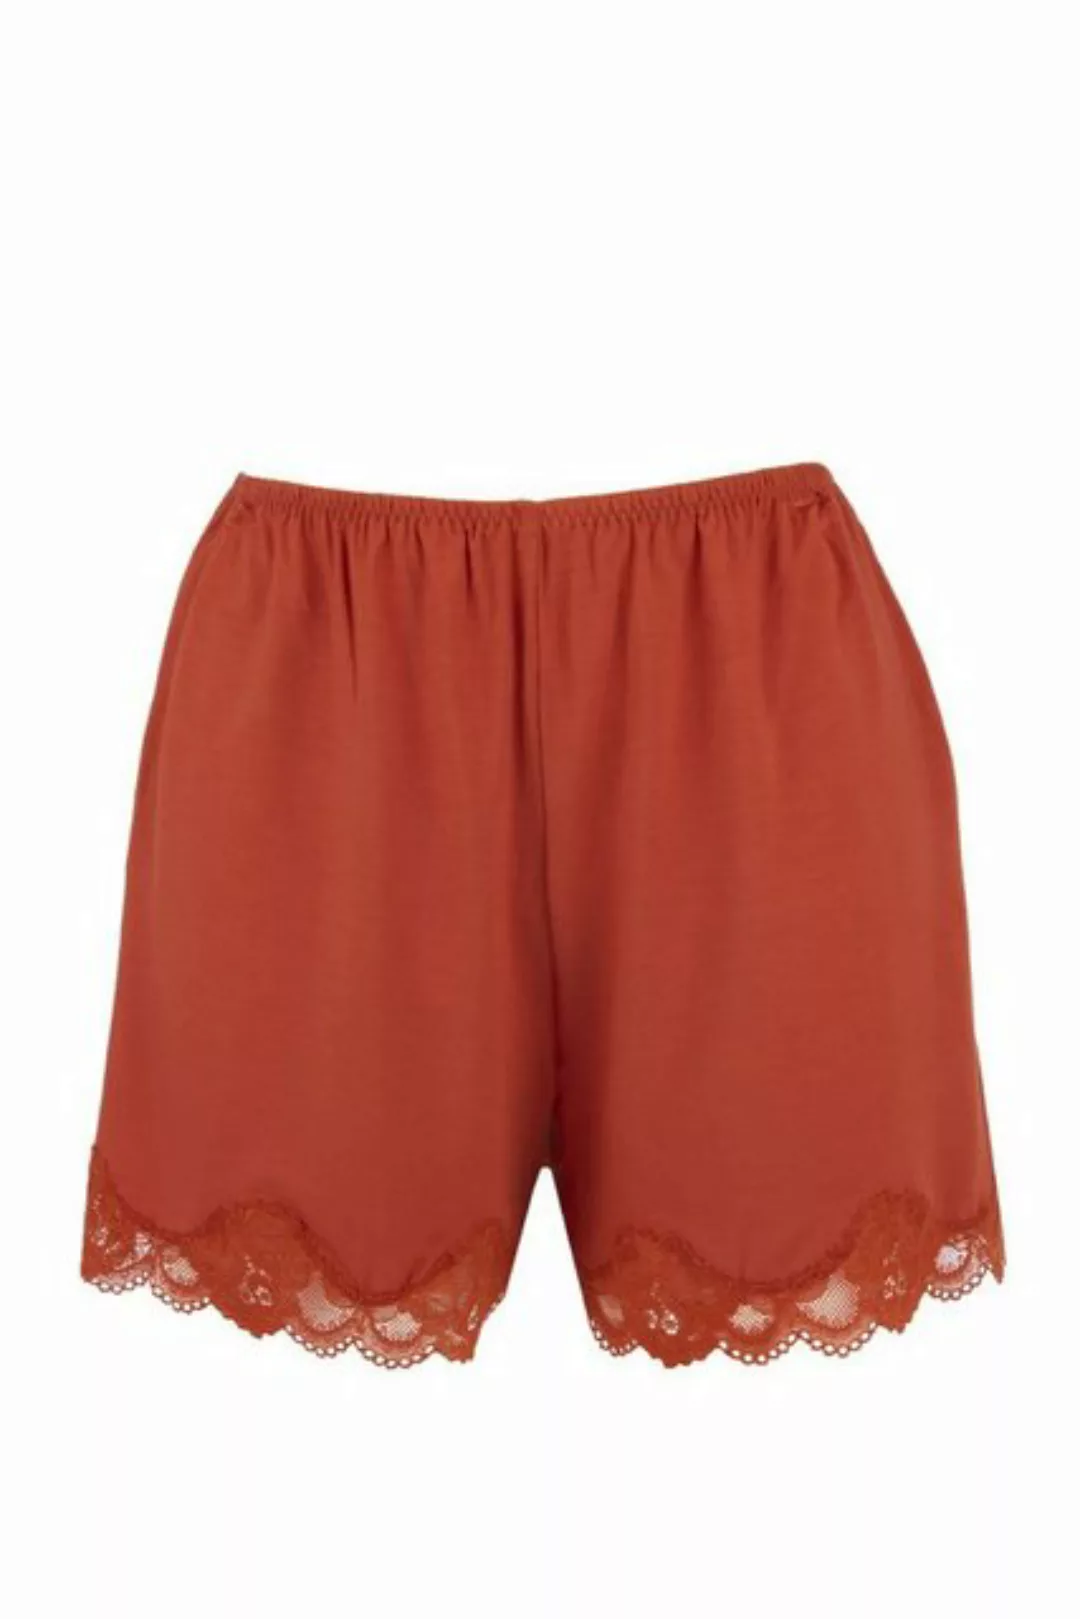 Antigel Short Simply Perfect Loungewear 38 orange günstig online kaufen